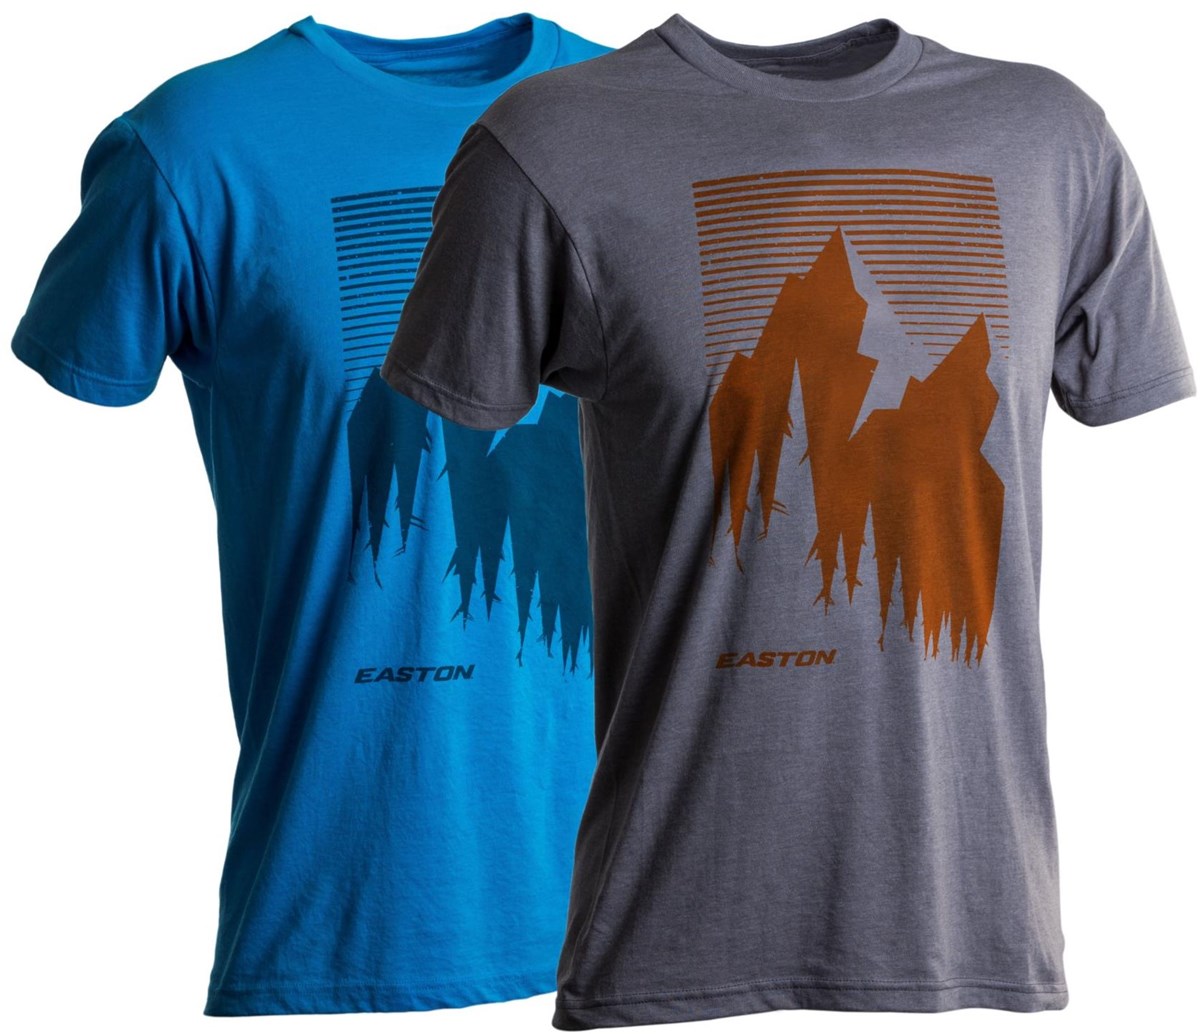 Easton Mountain T-Shirt product image